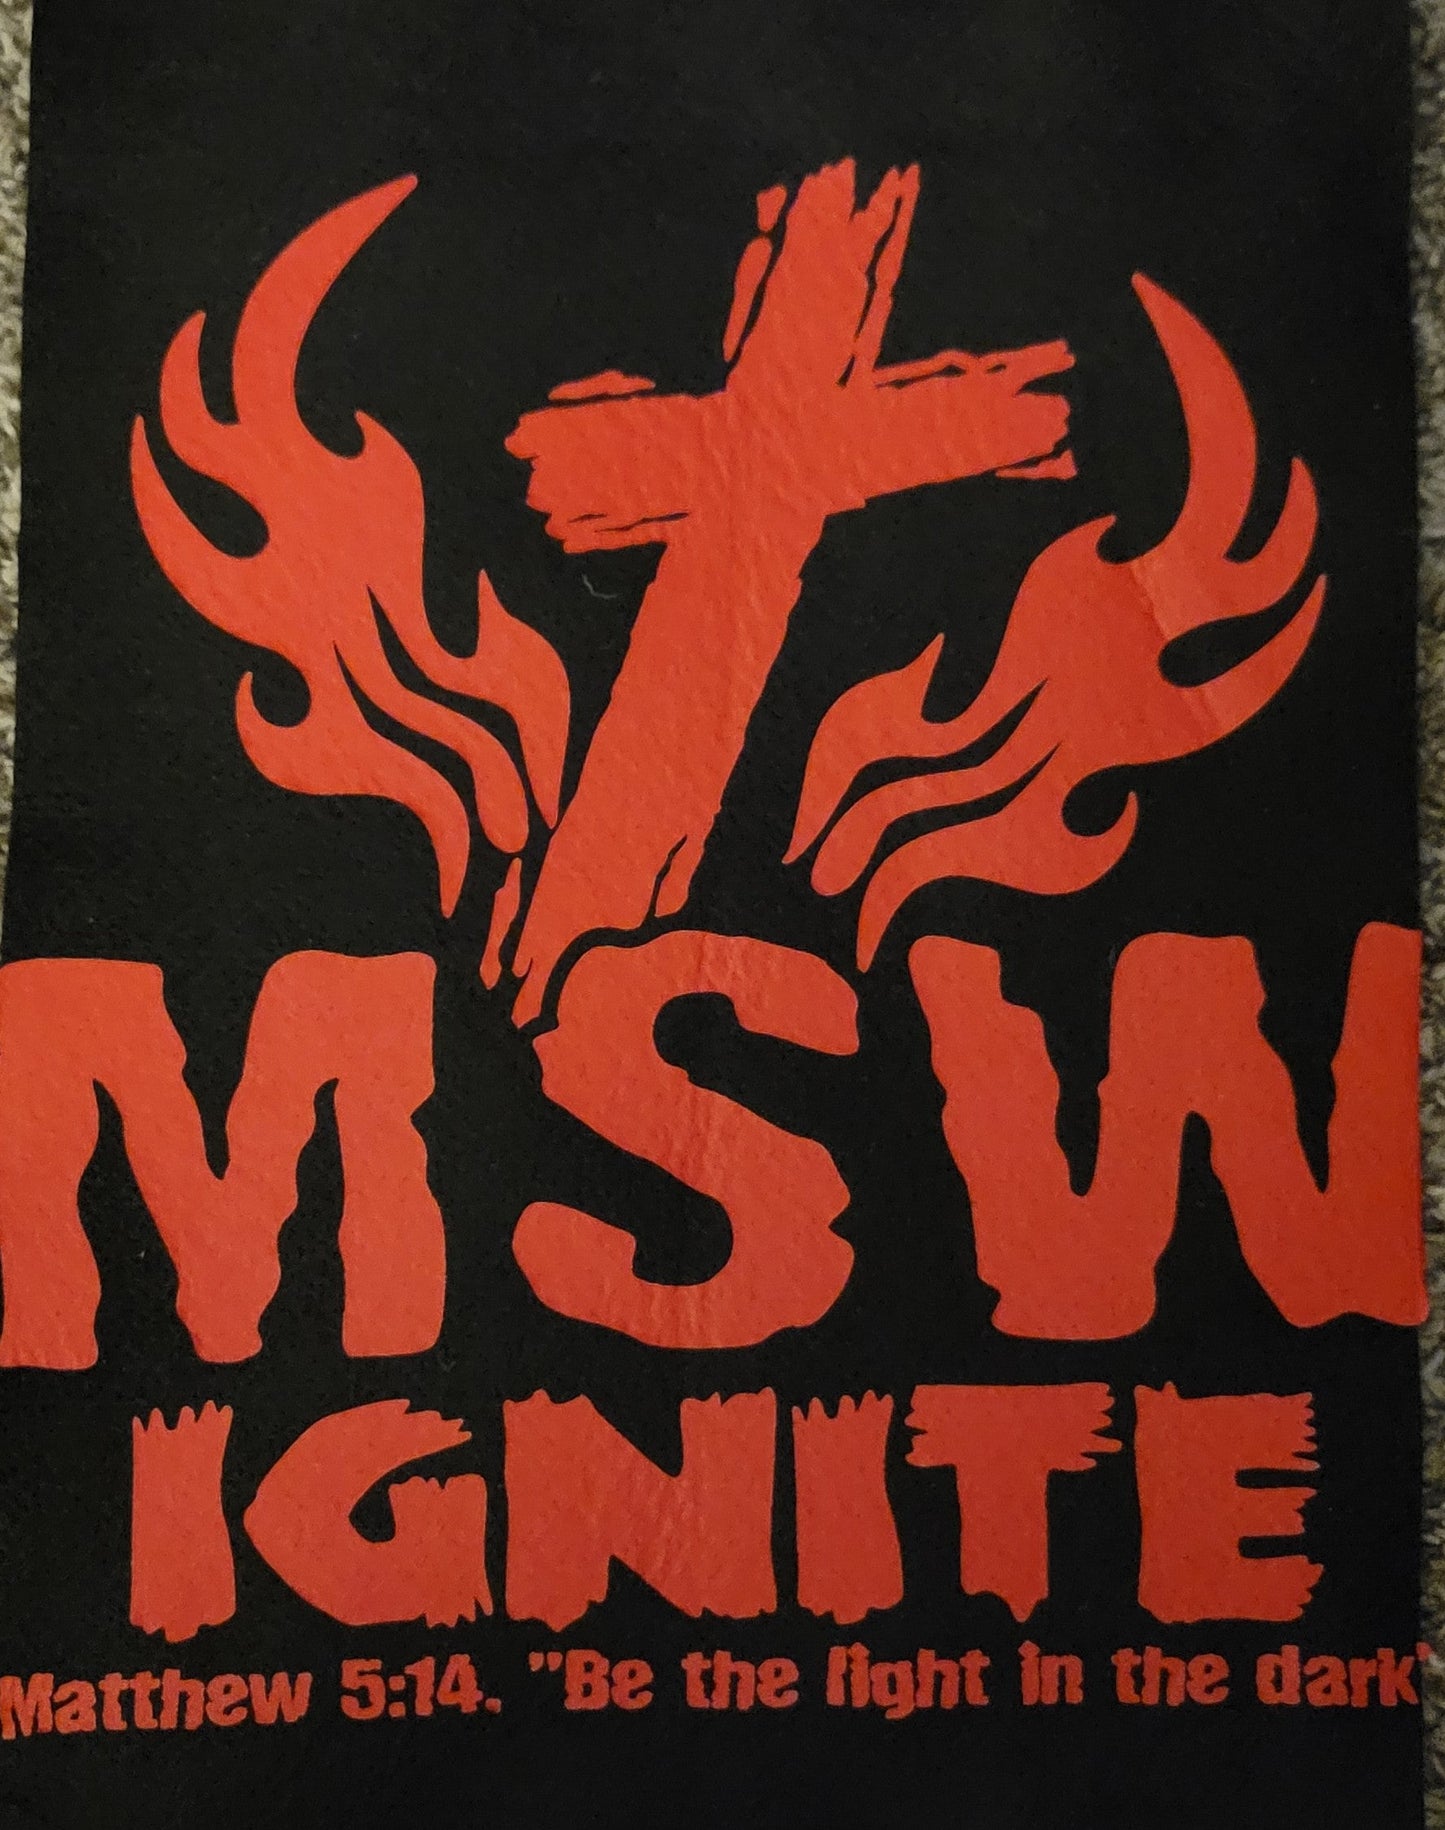 MSW ignite